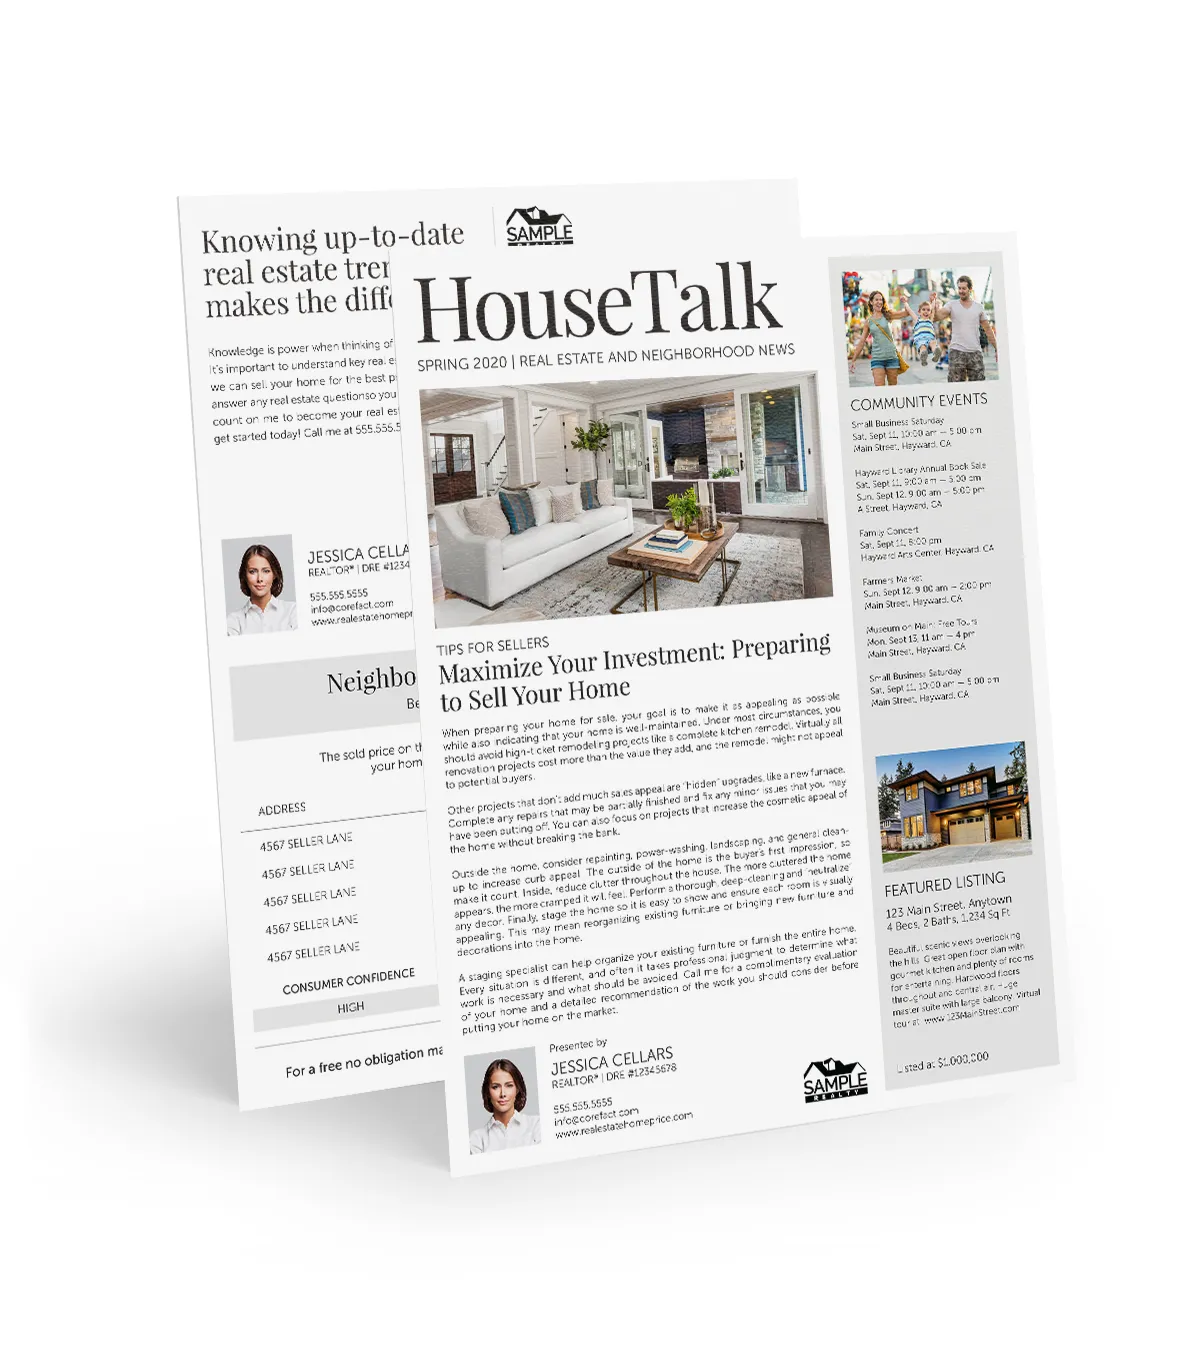 House Talk Newsletter - Preparing Your Home